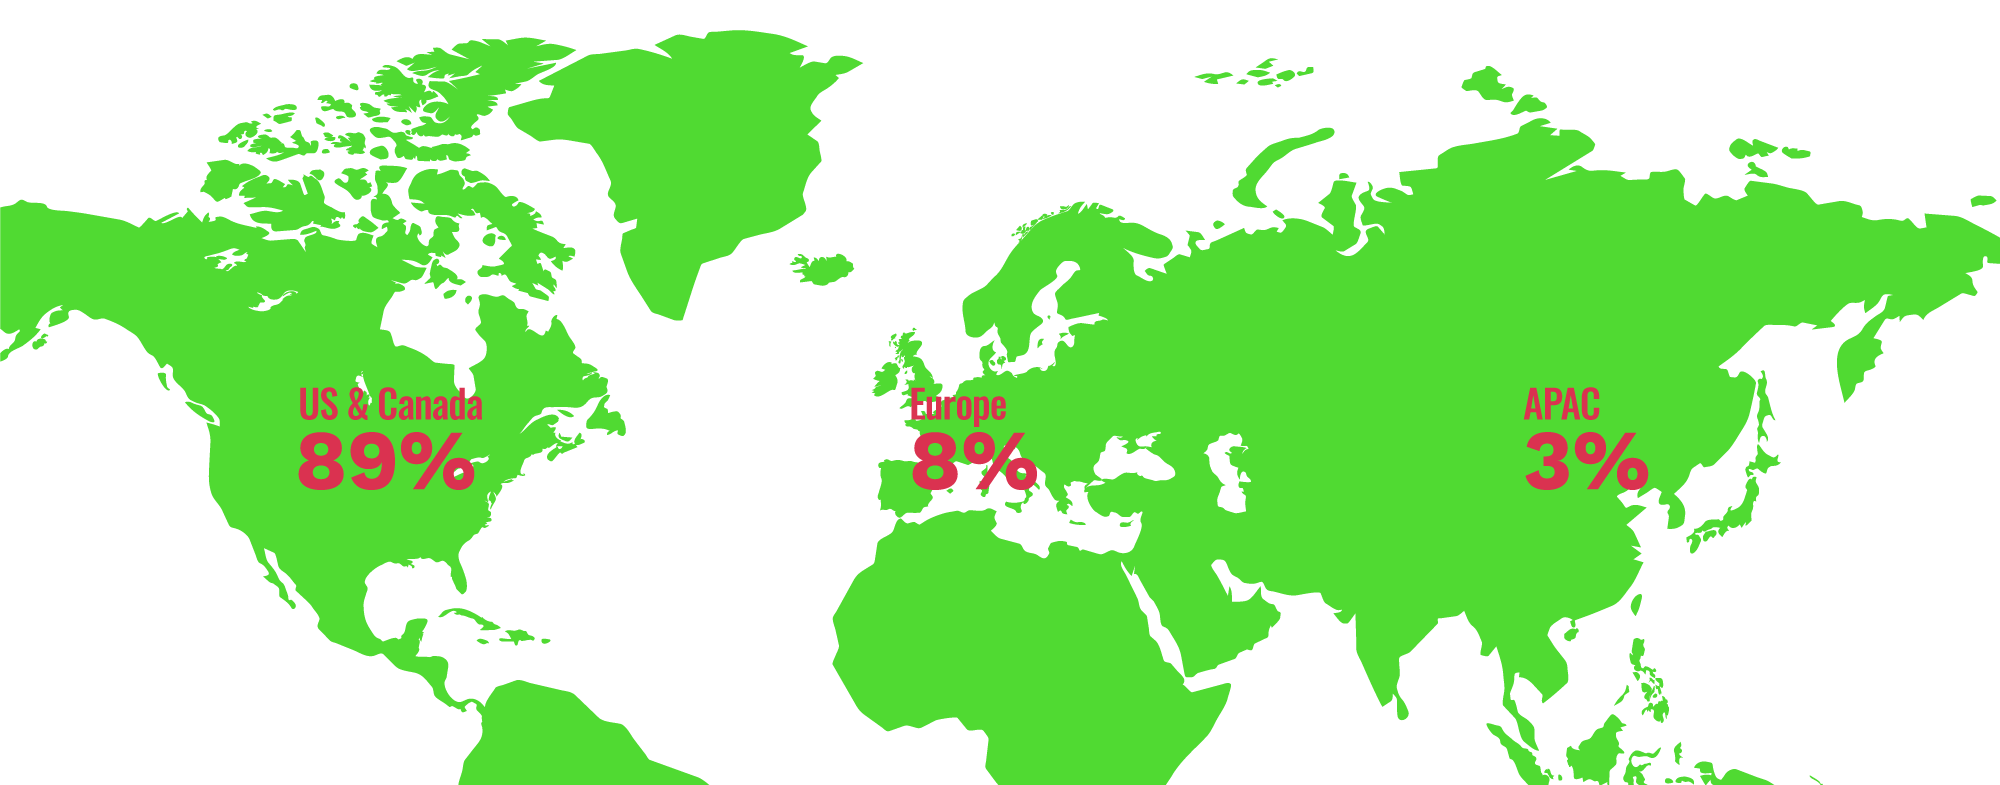 AOTMP Audience Global Distribution